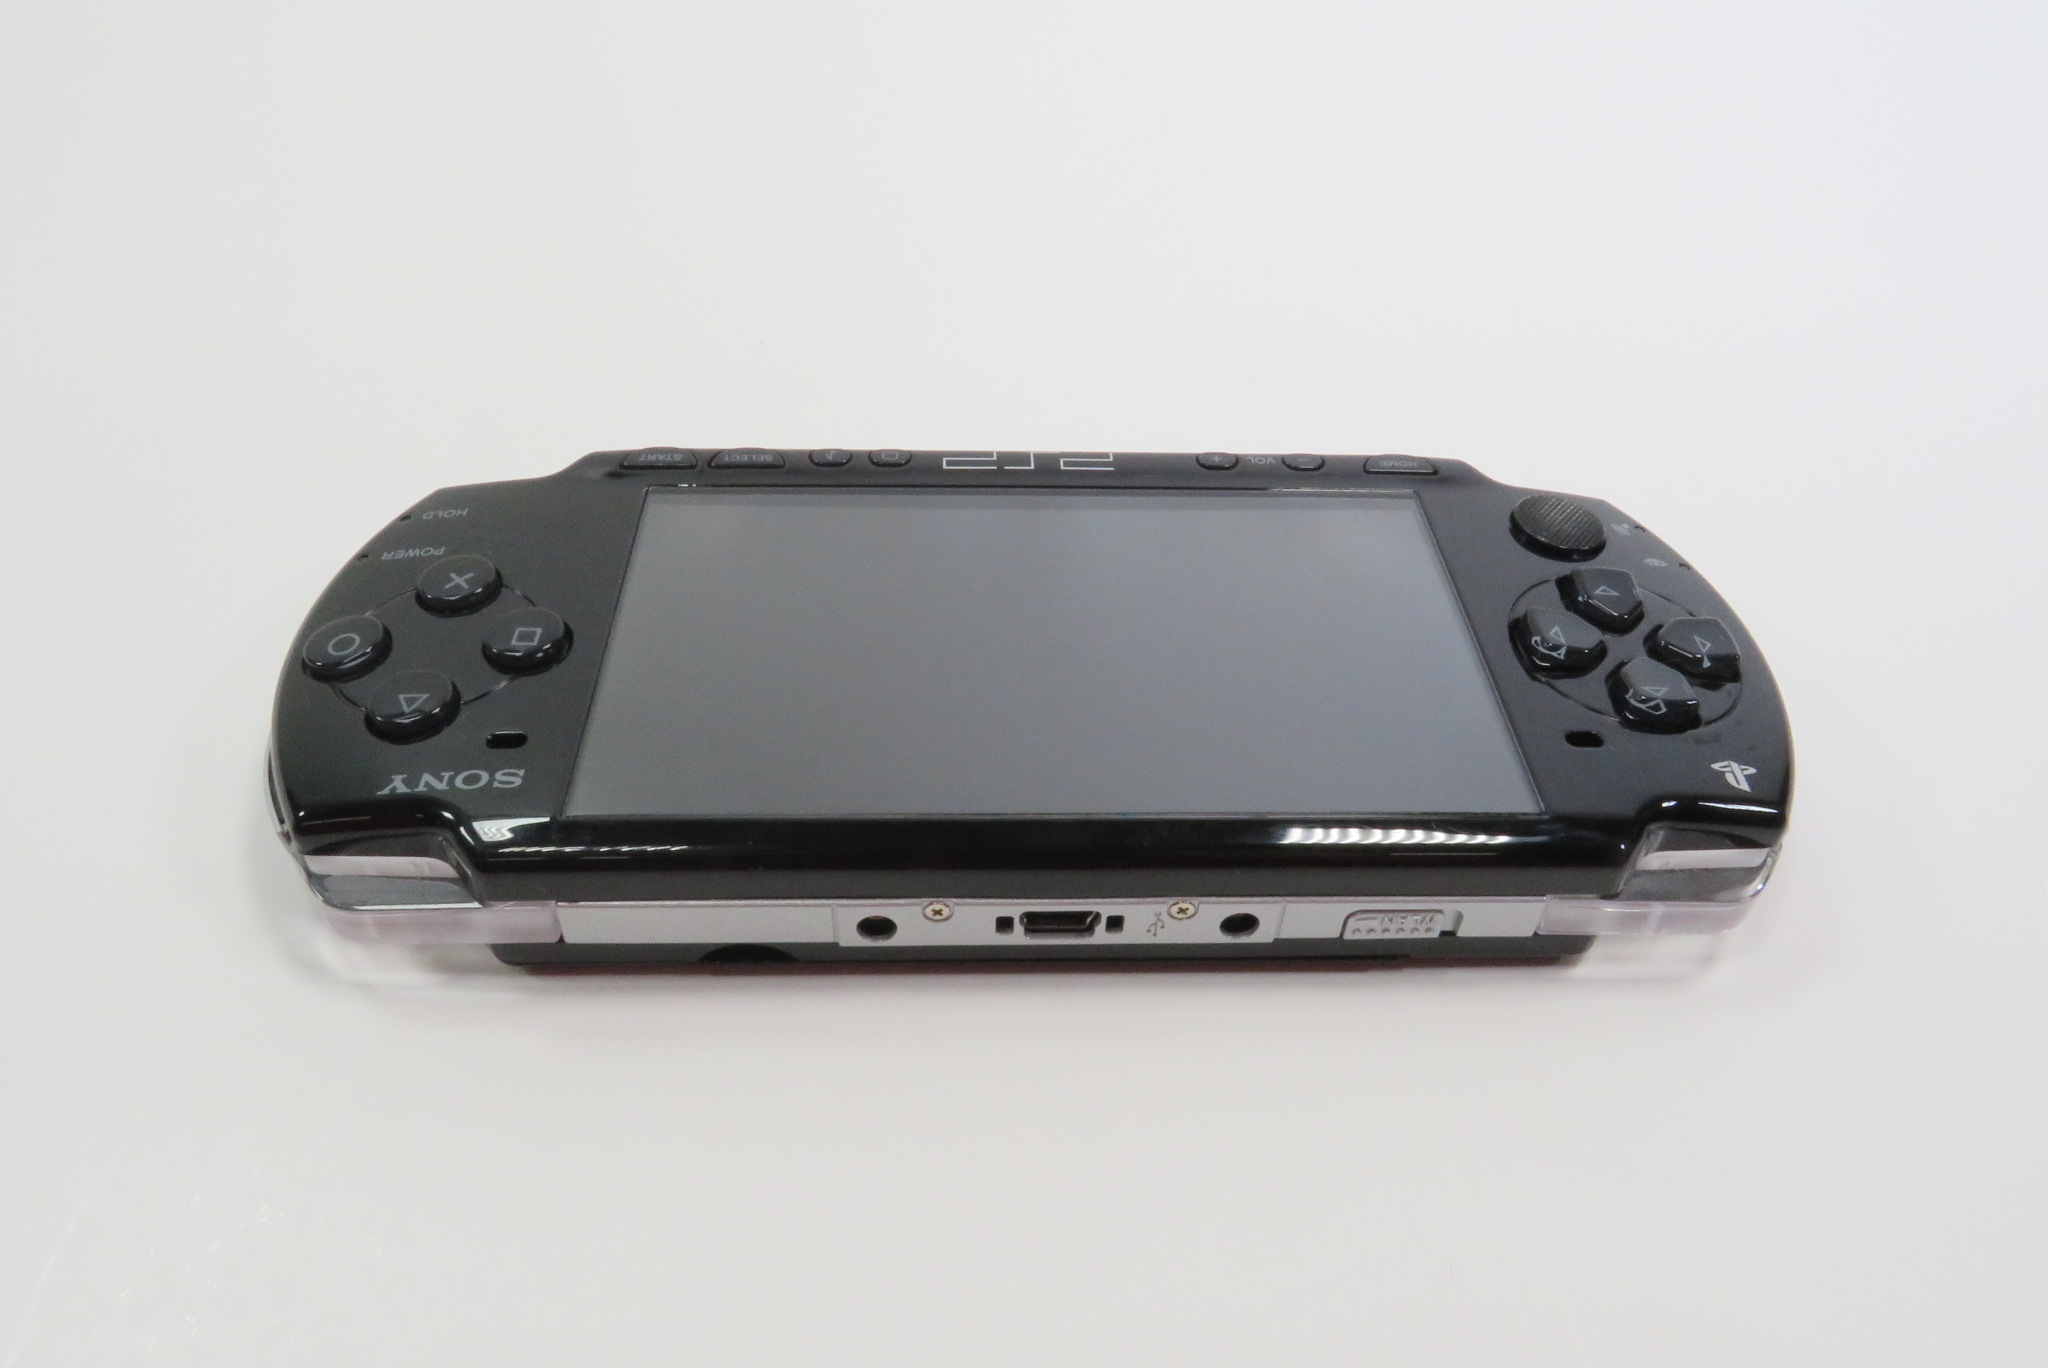 Sony PSP 2001 Handheld Game System -8288